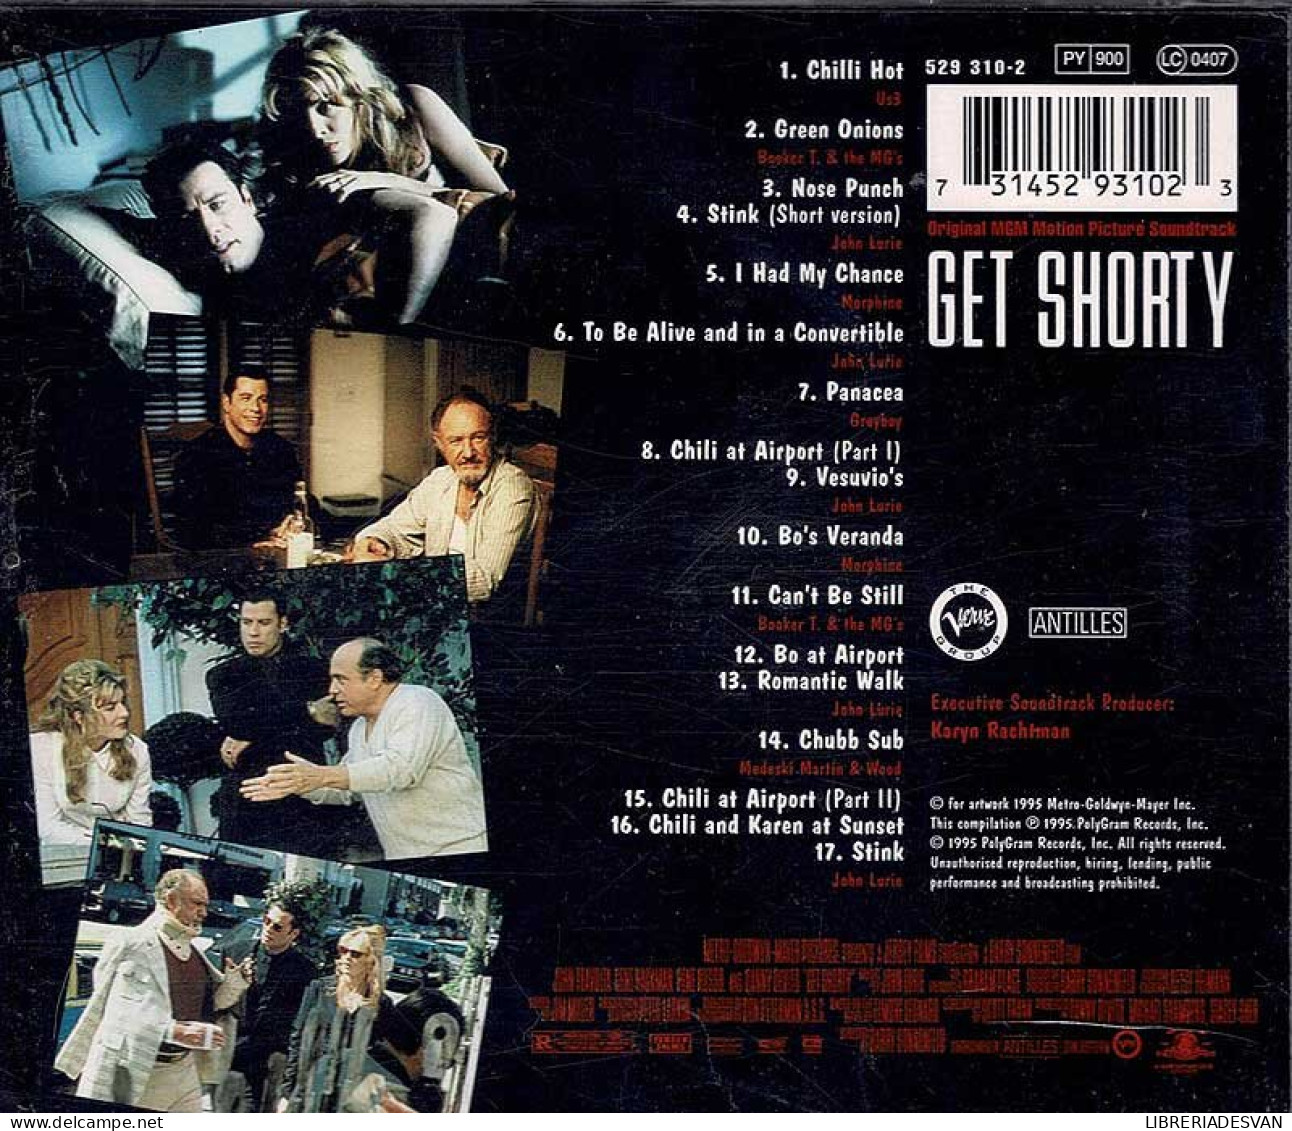 Get Shorty (Original MGM Motion Picture Soundtrack). CD - Soundtracks, Film Music